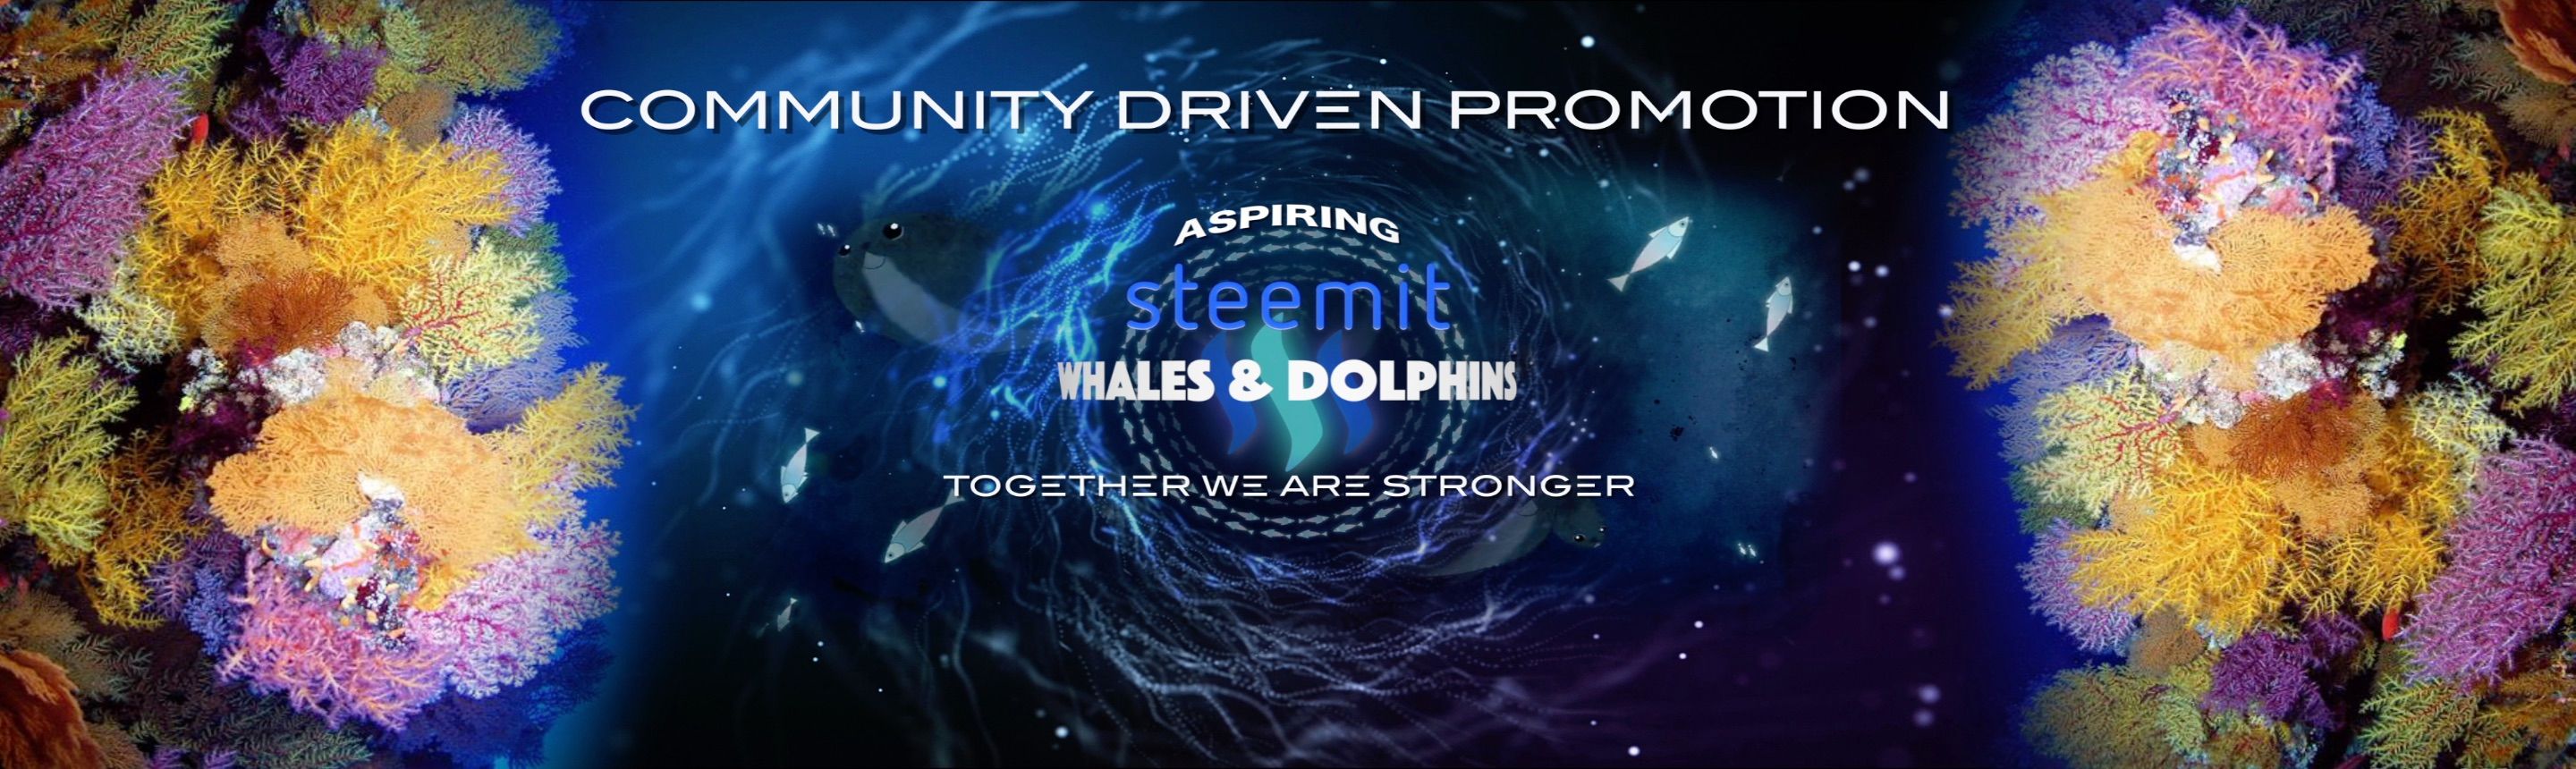 Aspiring Steemit Whales & Dolphins